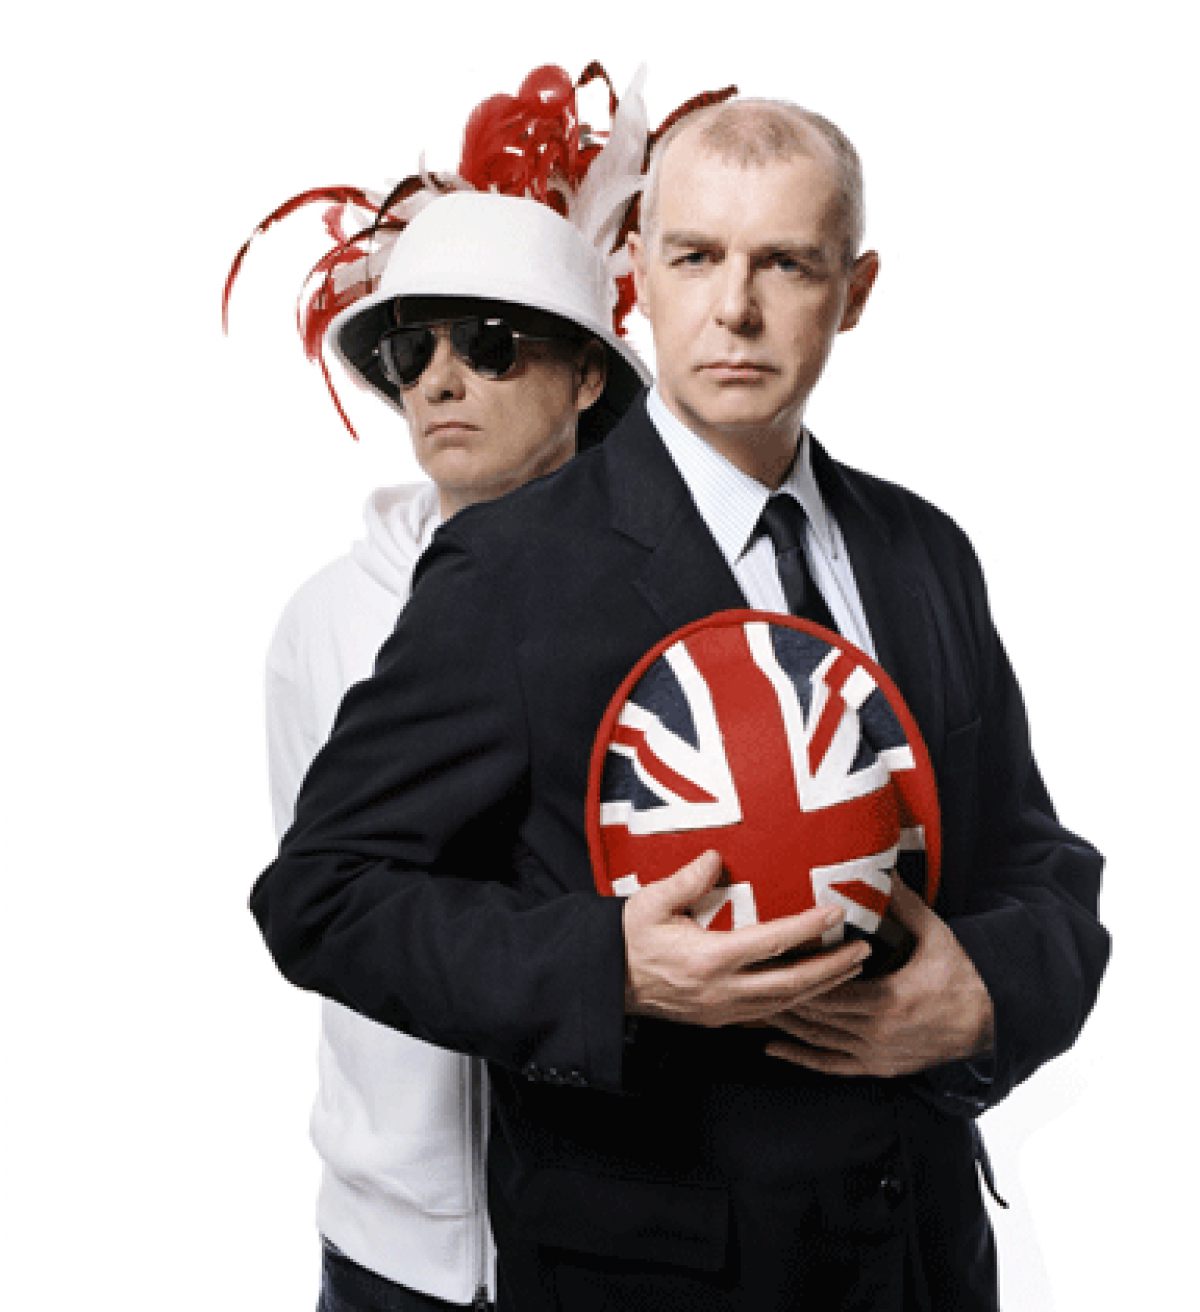 Pet Shop Boys Wallpapers